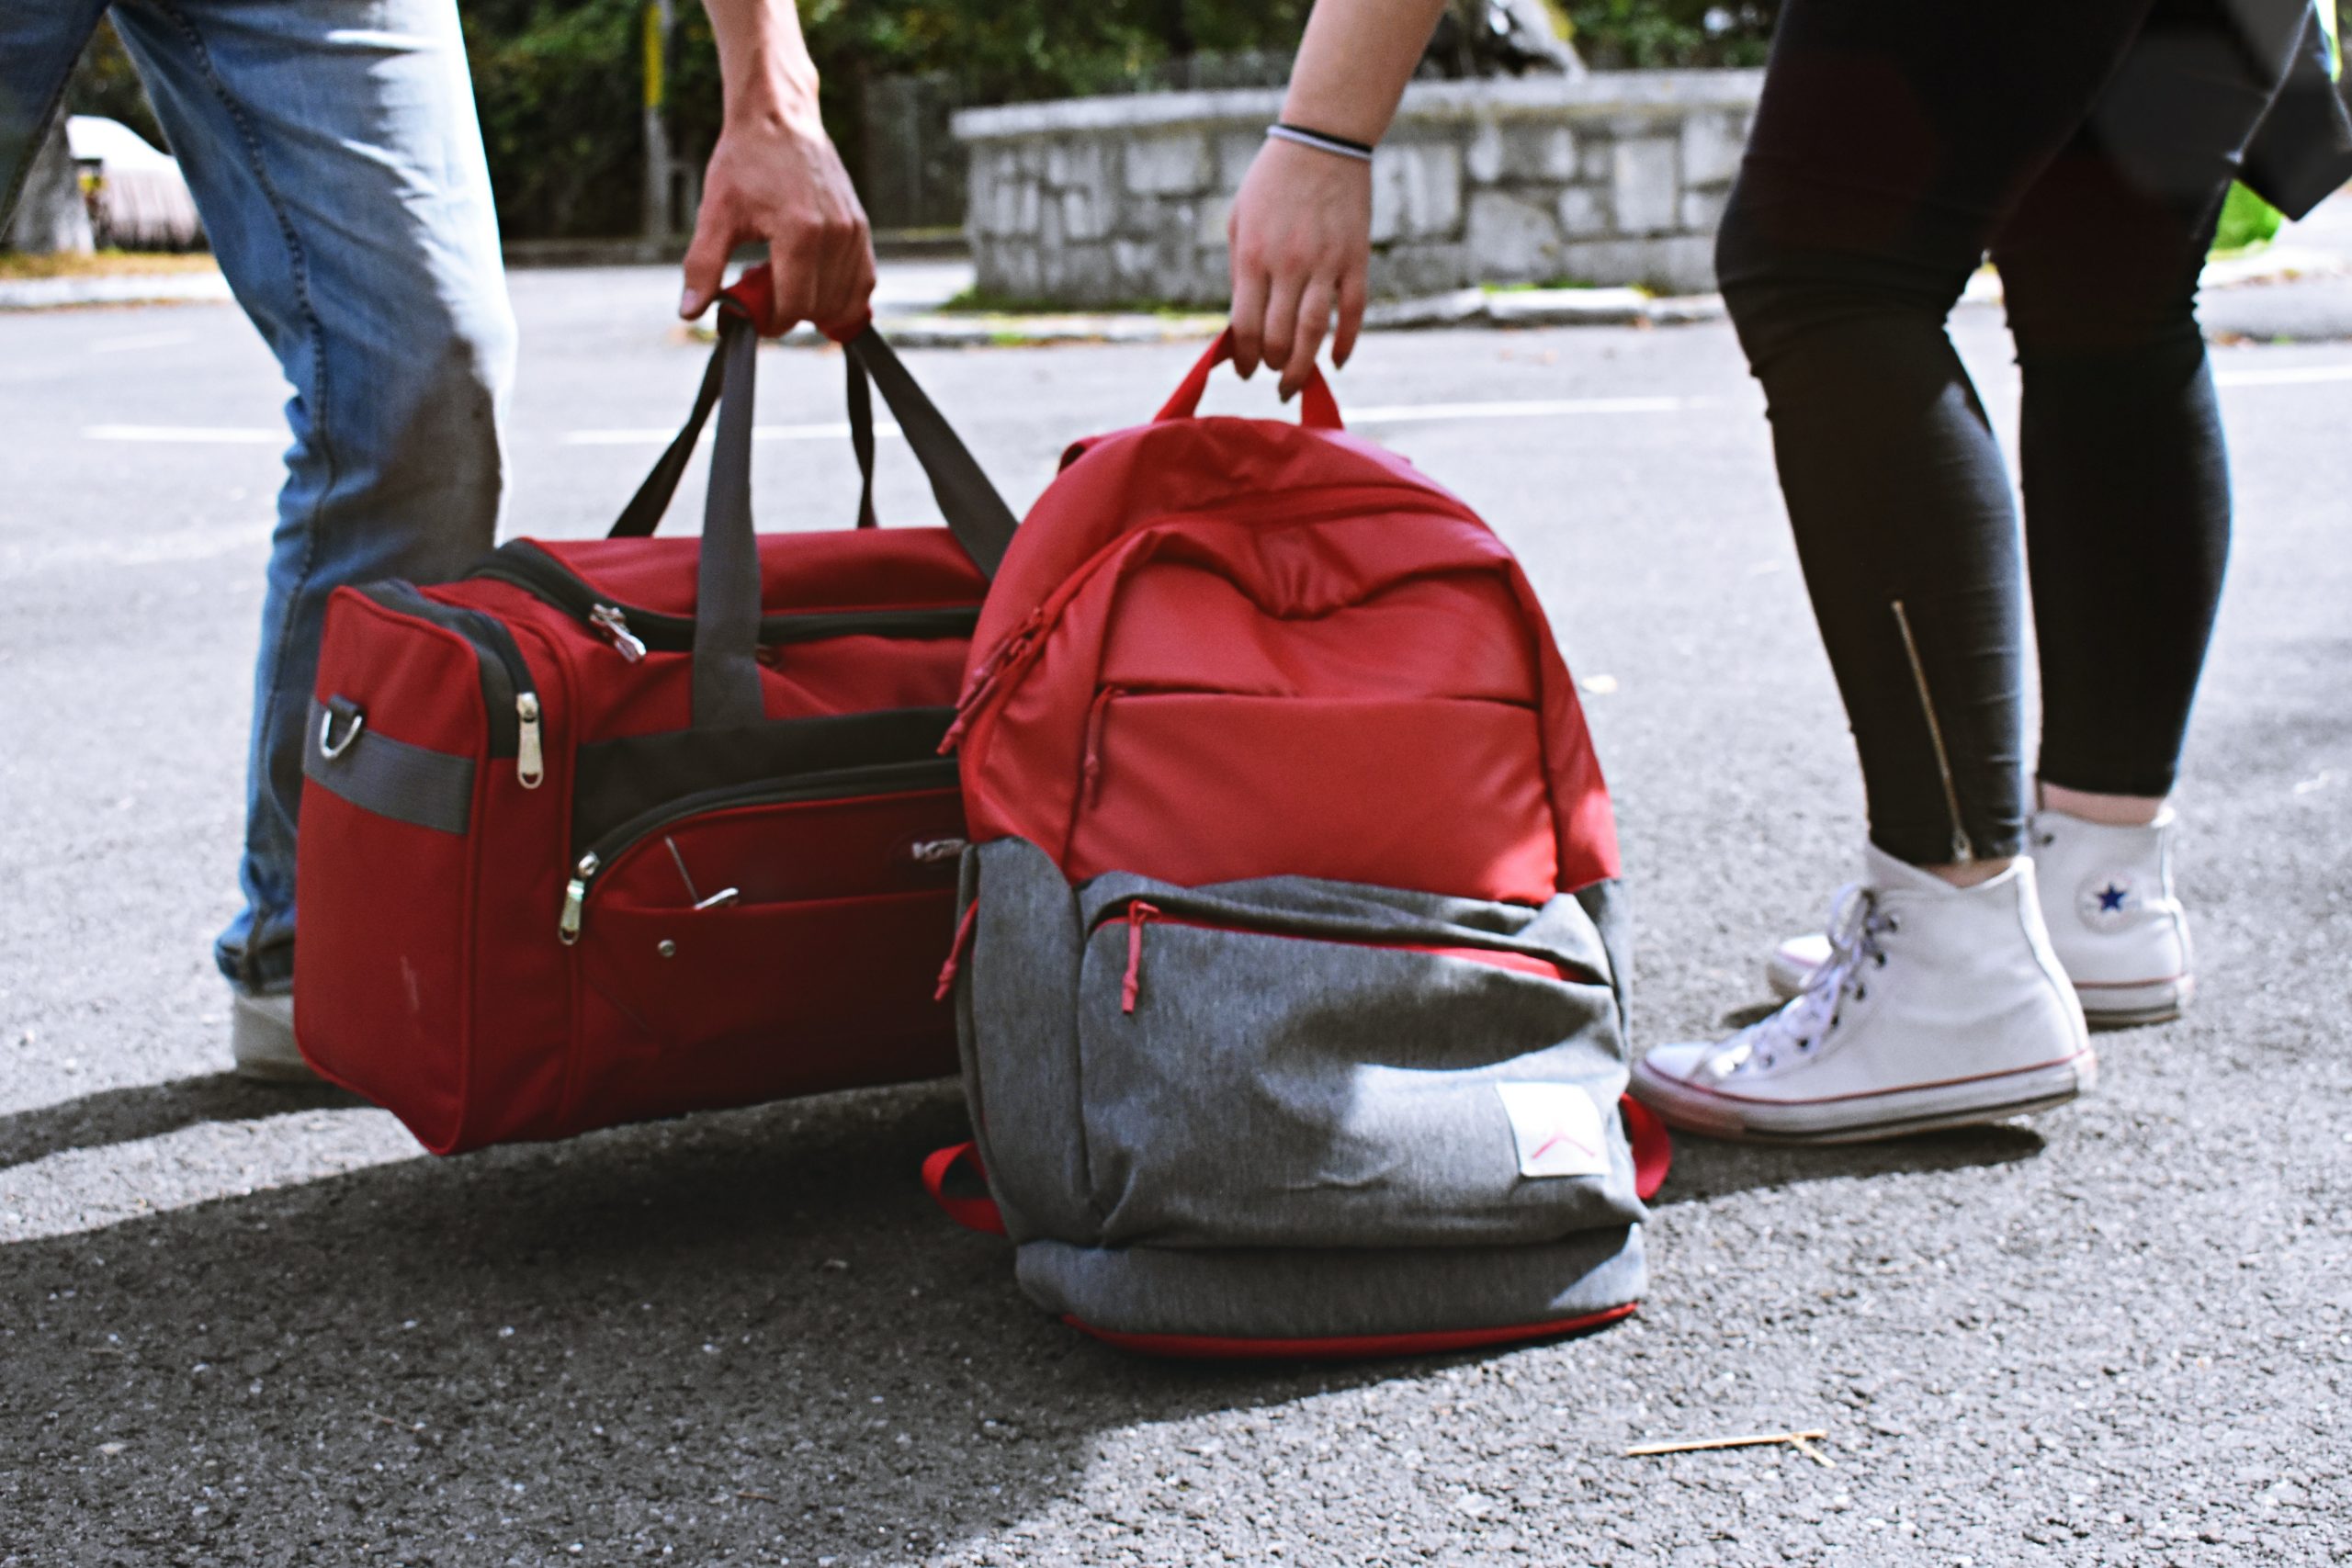 Duffel bag and backpack on floor